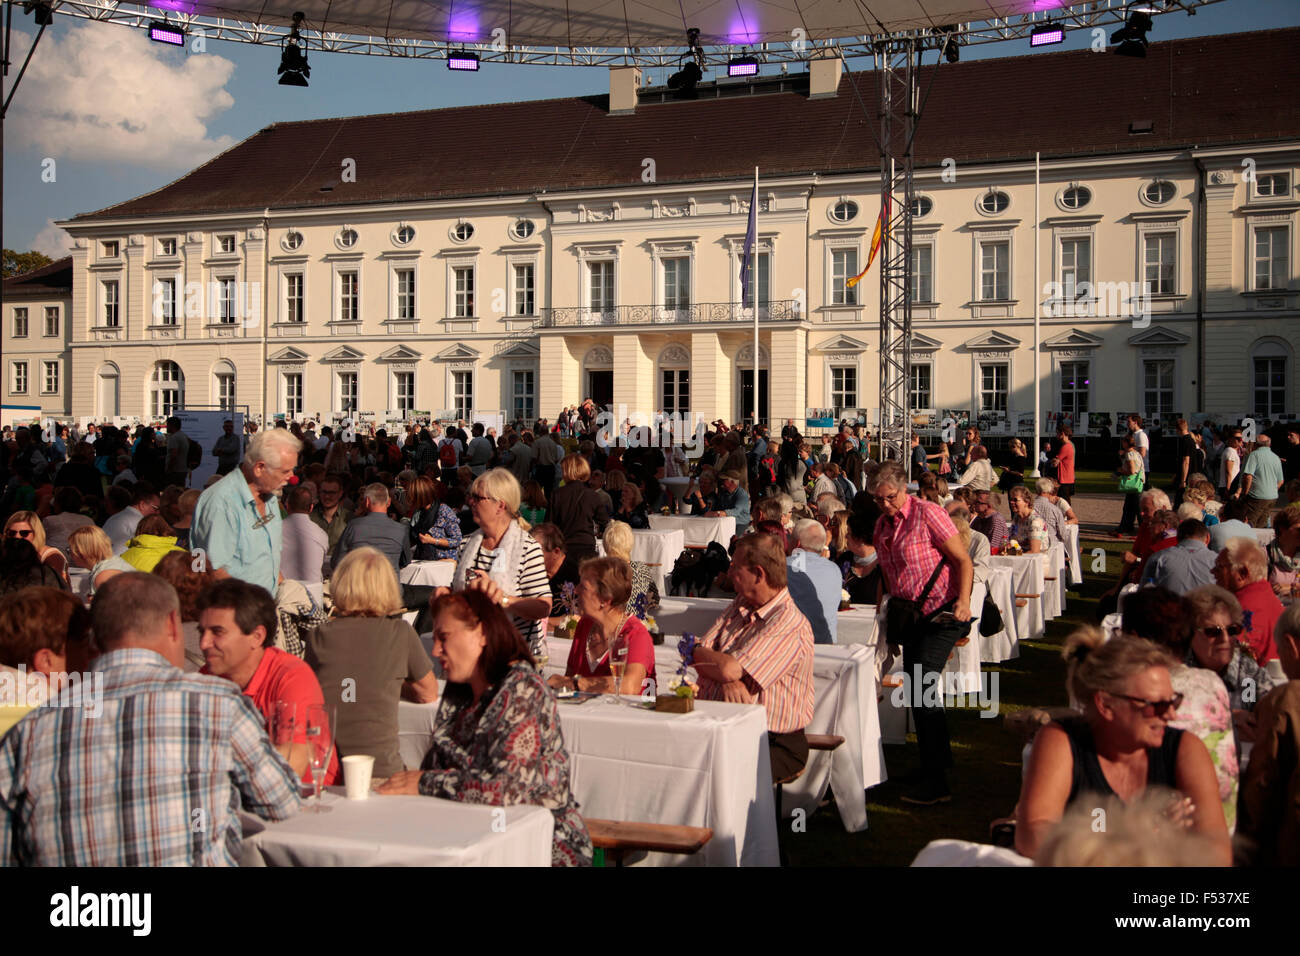 jährliche Bürgerfest am Schloss Bellevue, Berlin, Deutschland Stockfoto